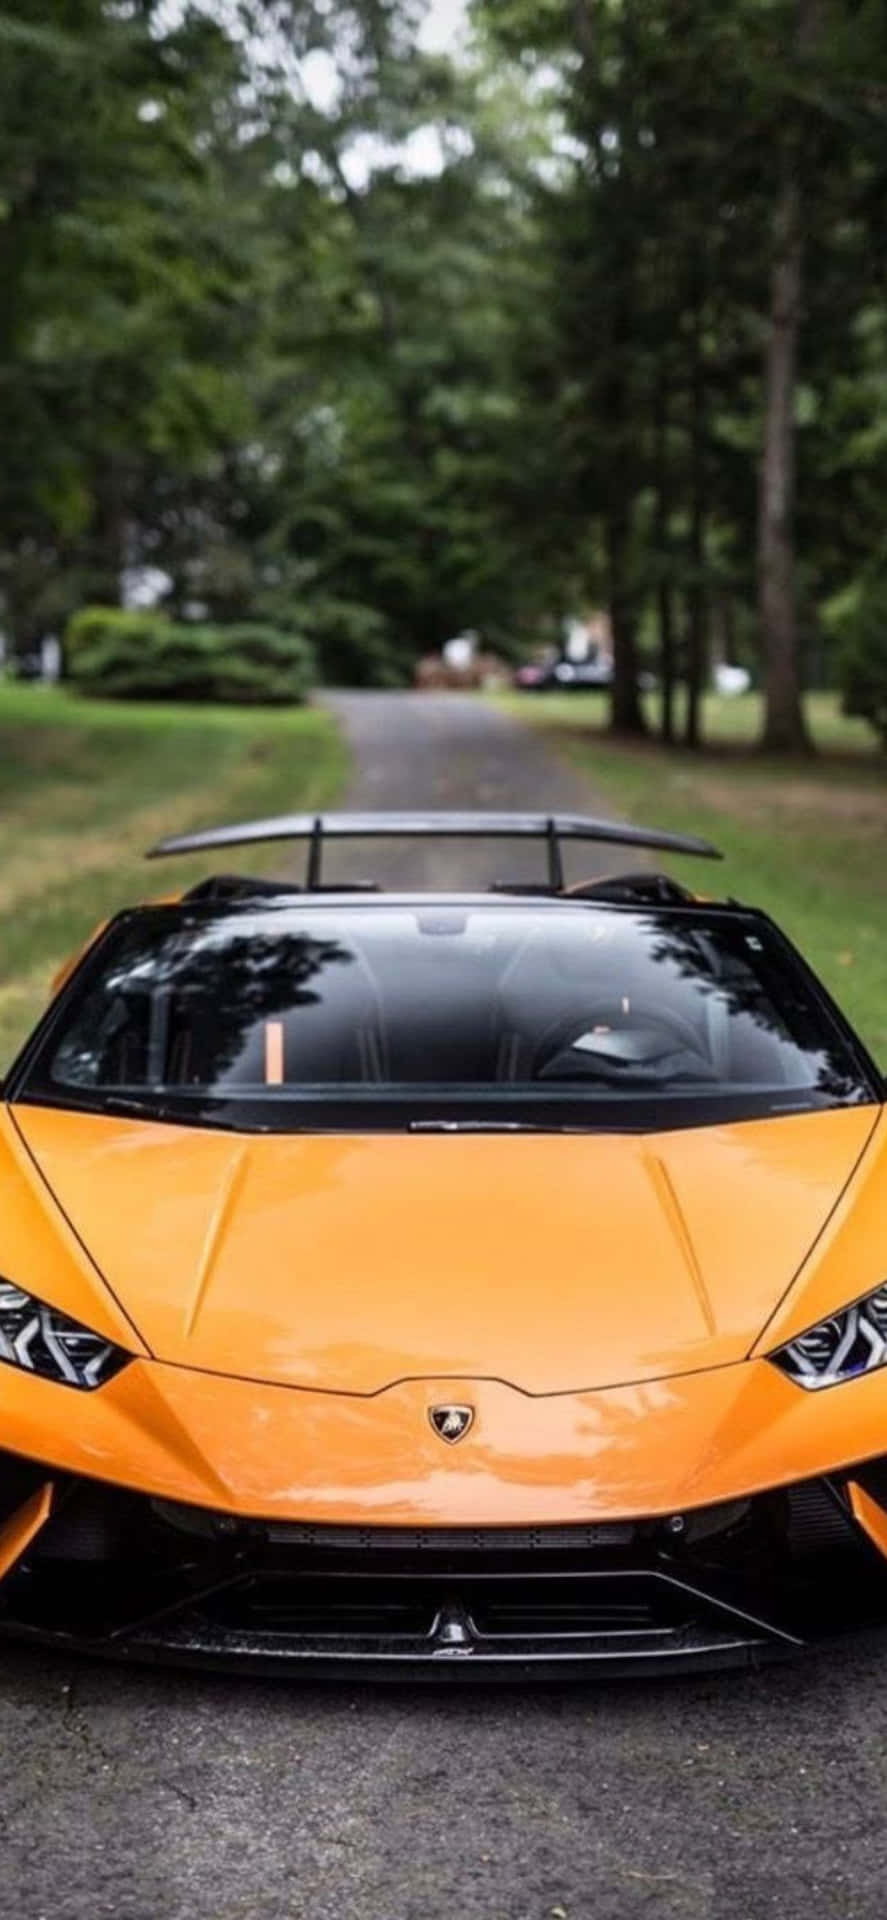 Iphonexs Max Lamborghini Svart Och Orange Bakgrund.